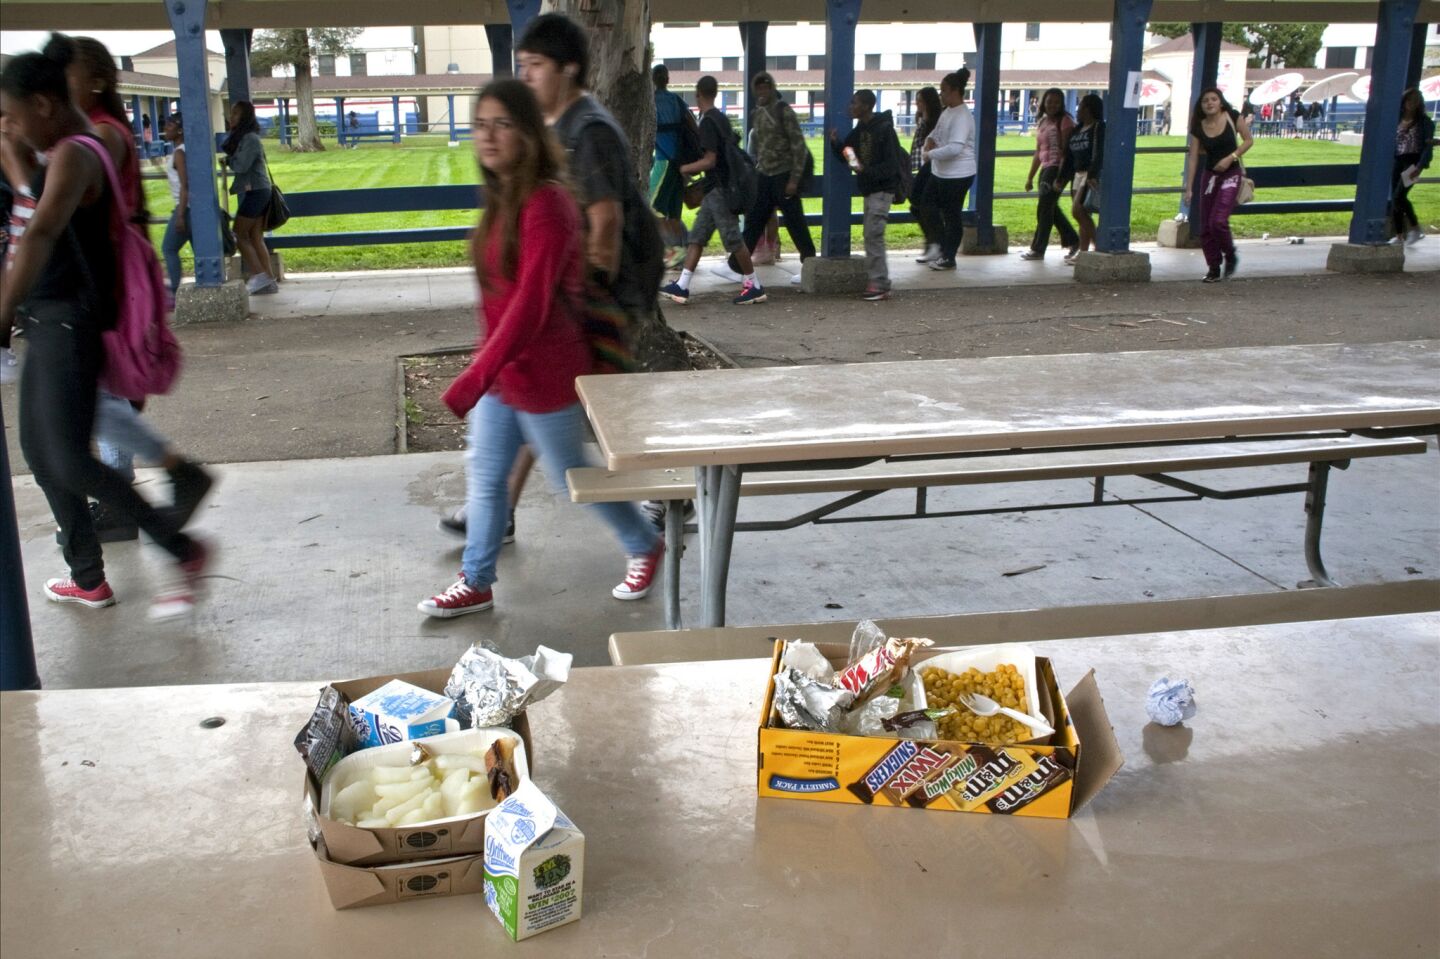 School food waste